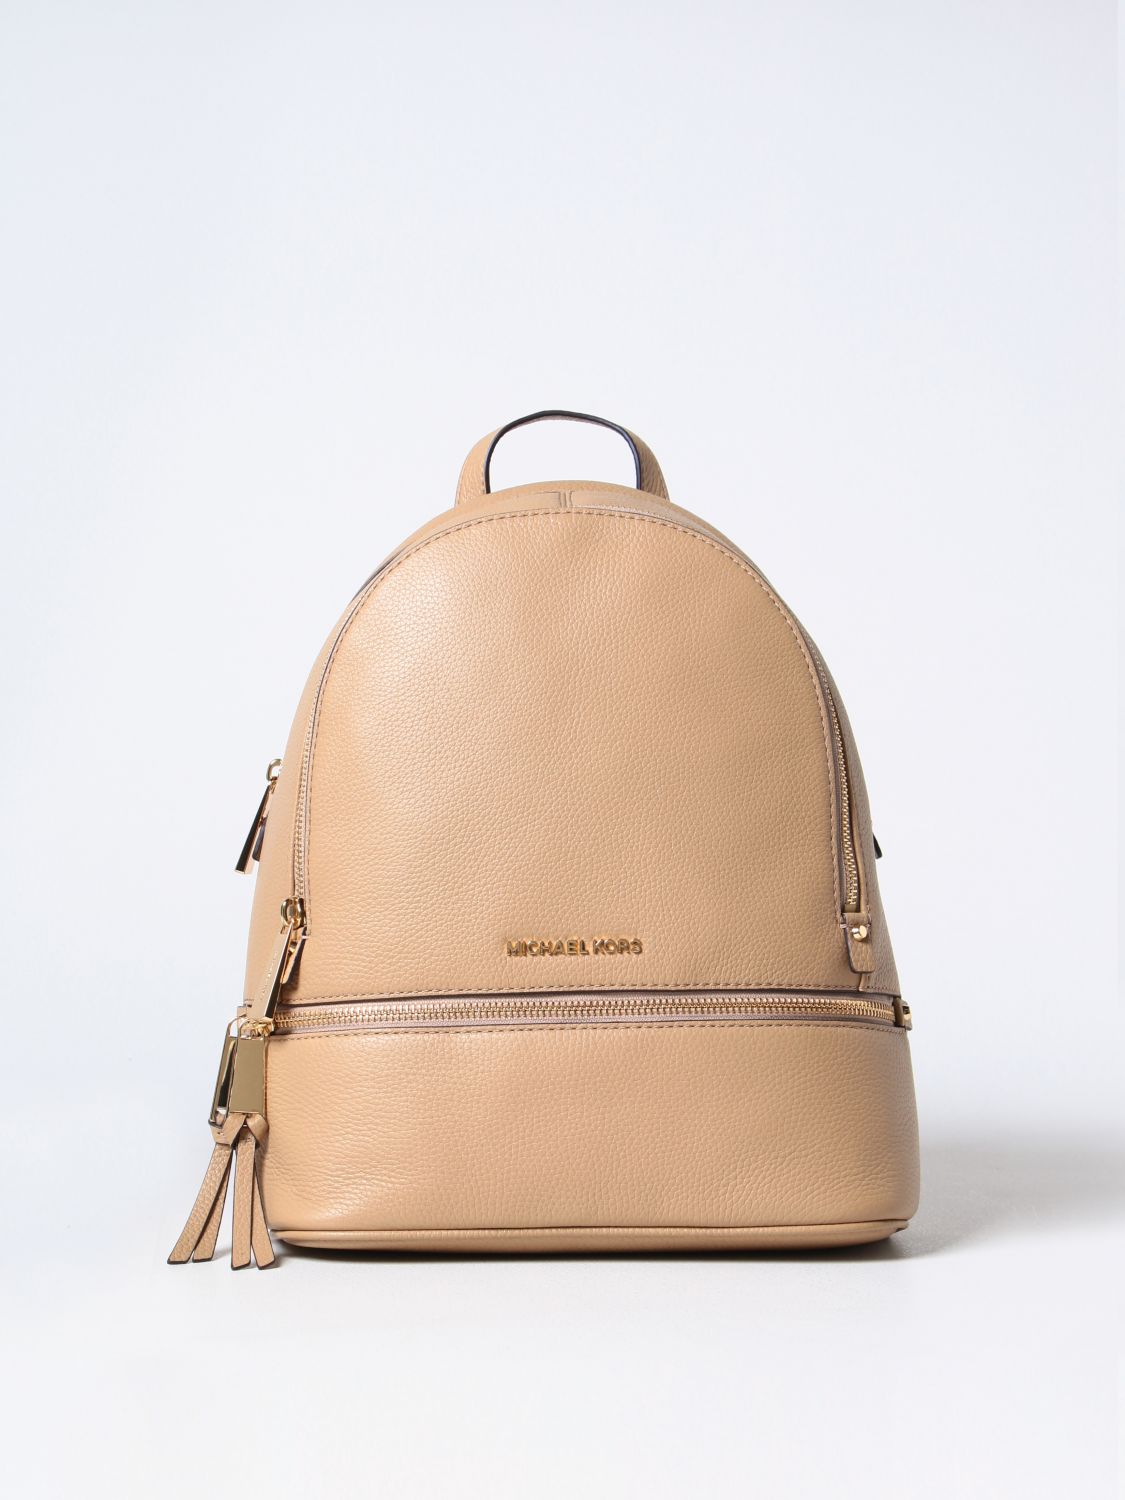 Michael Kors Rhea Medium MK Signature Backpack Leather Bag  eBay